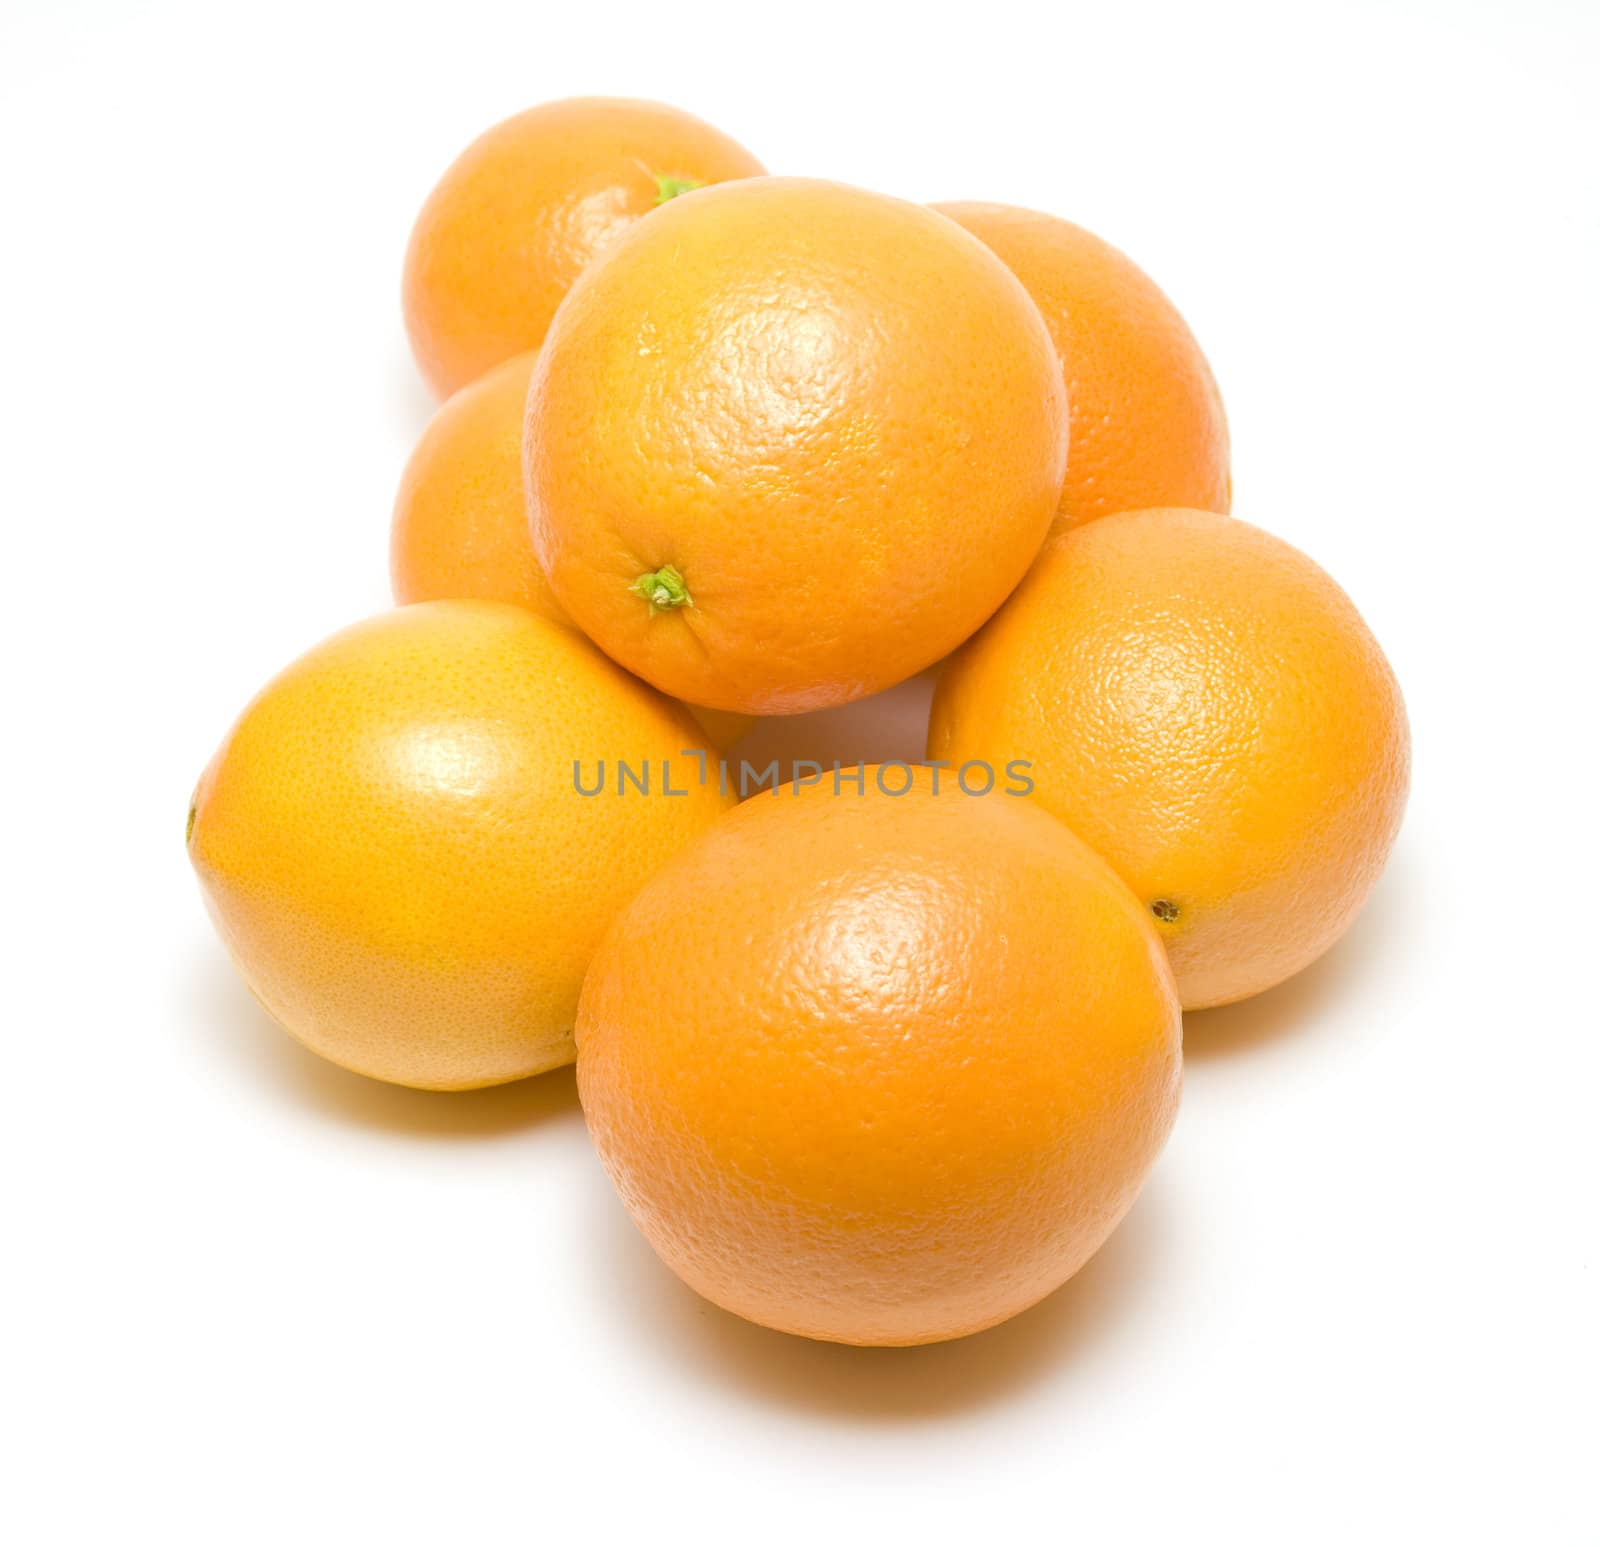 Bunch of oranges by ursolv